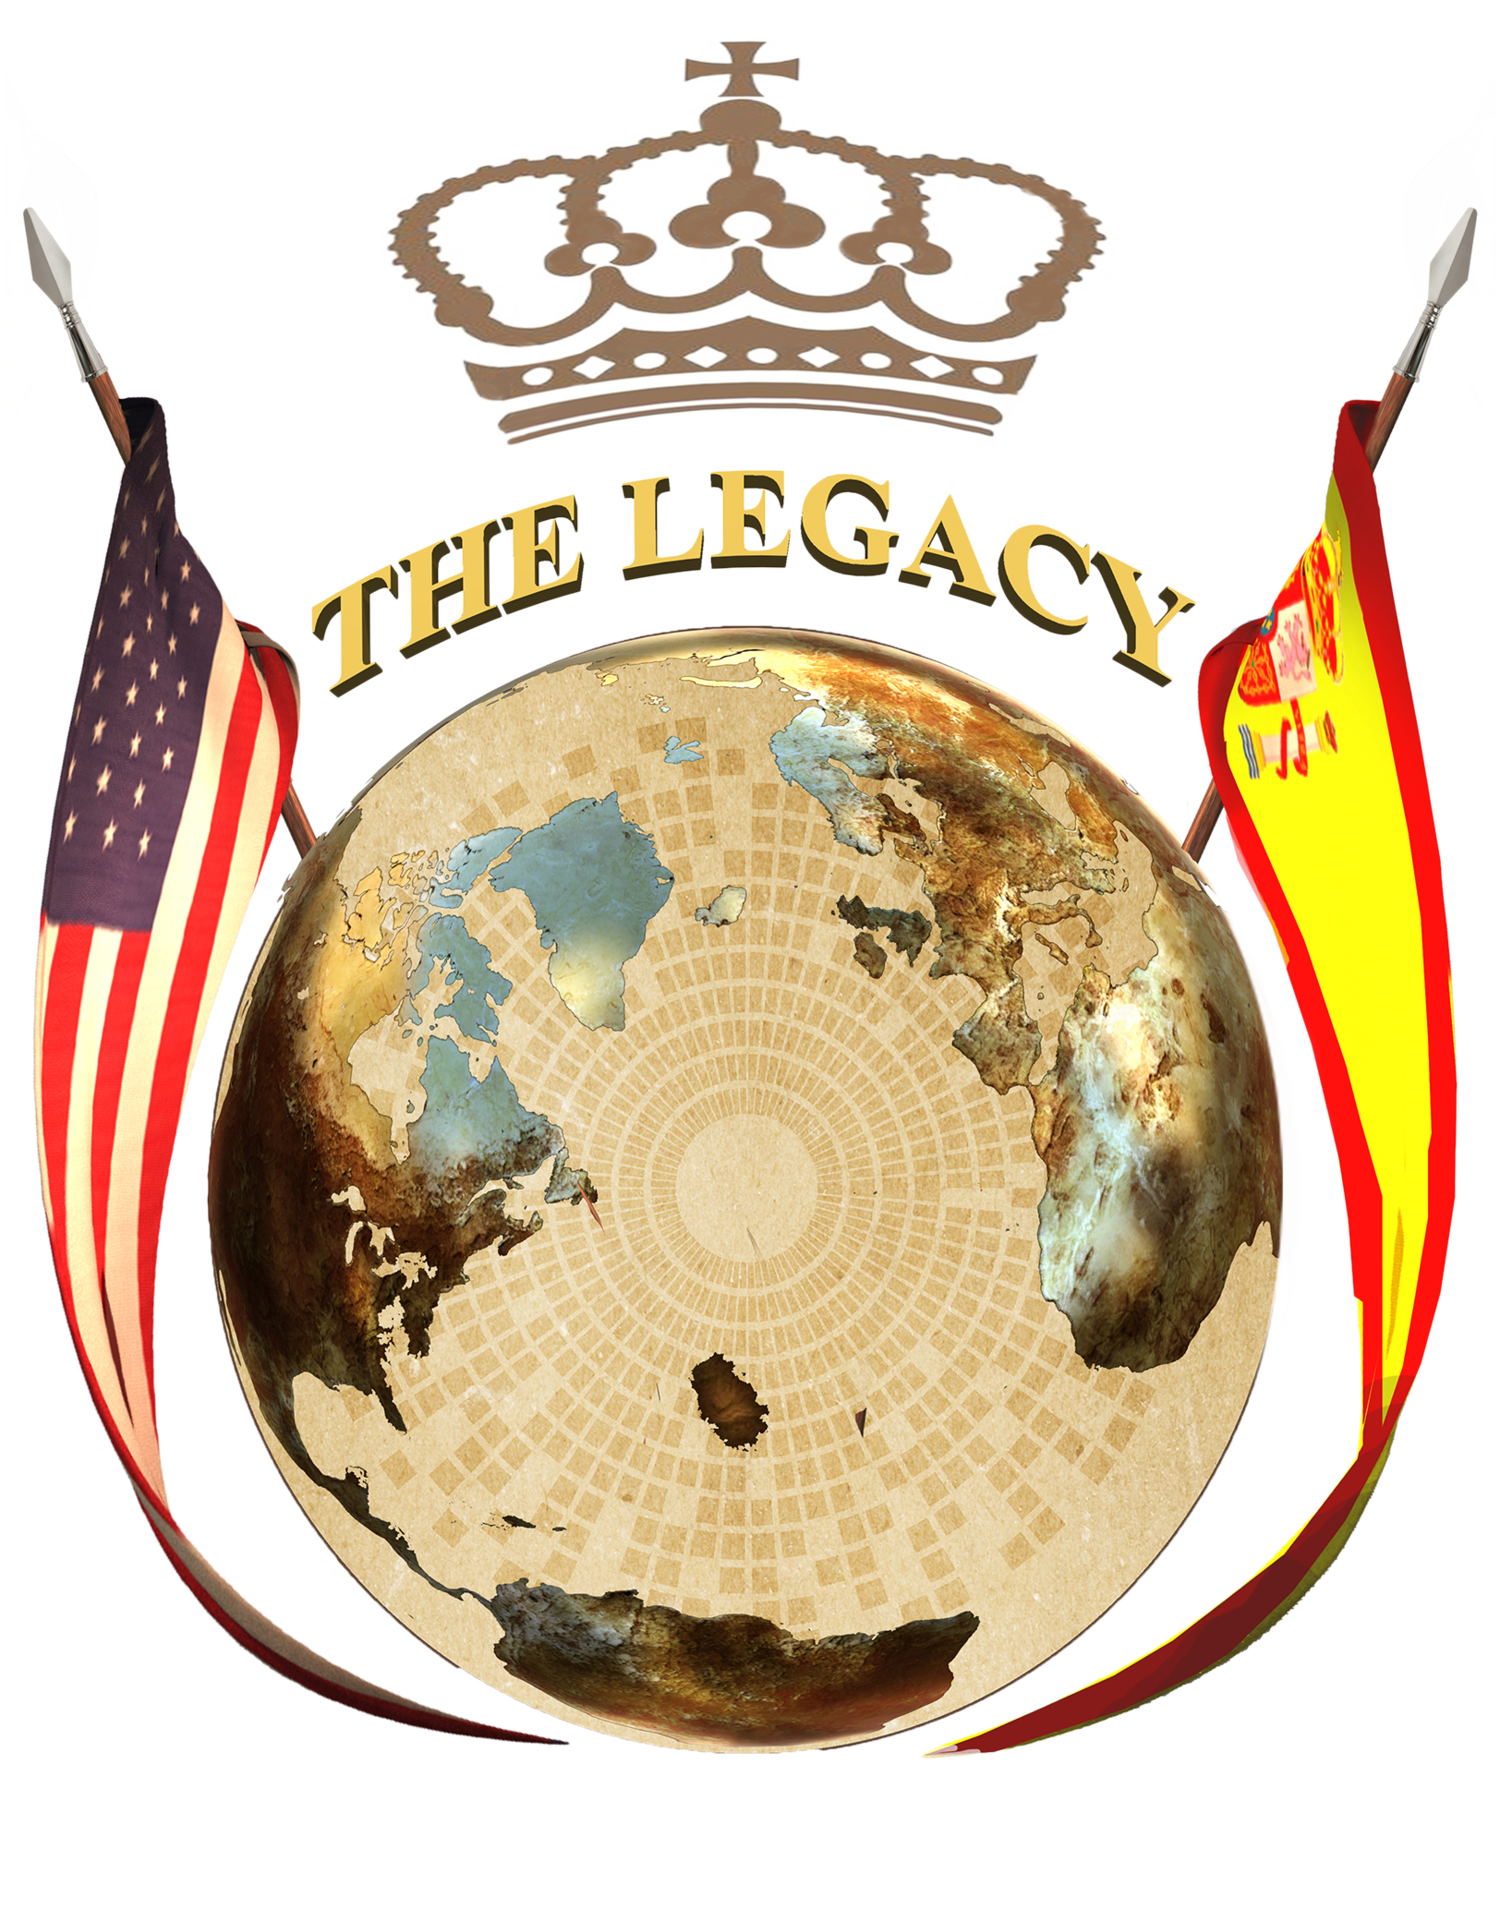 logo legacy